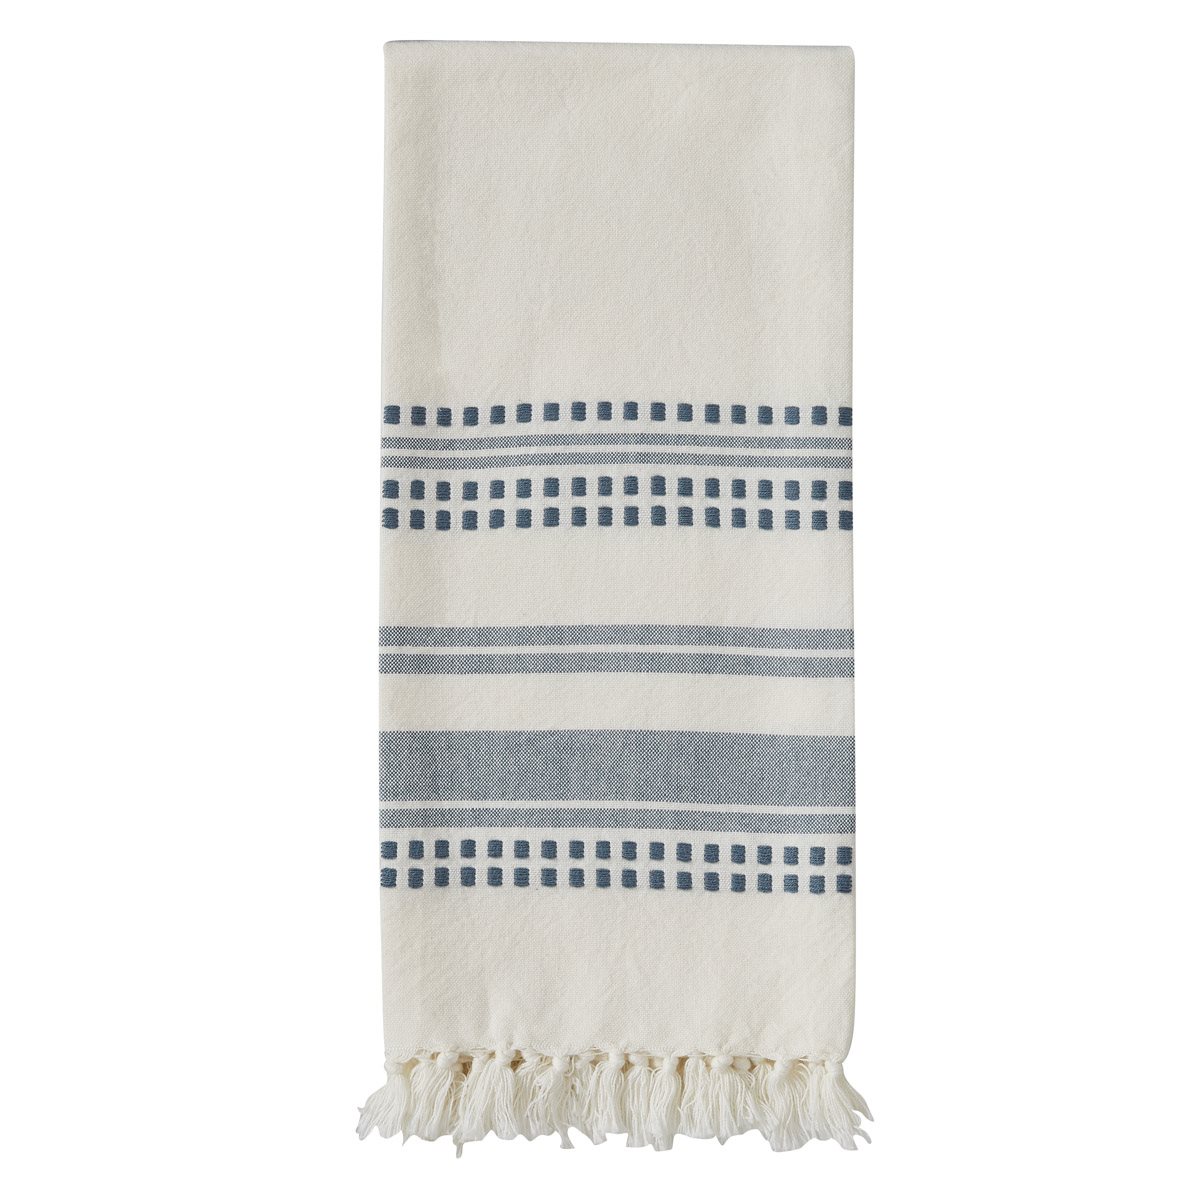 Kyla Woven Towel - Marine Blue